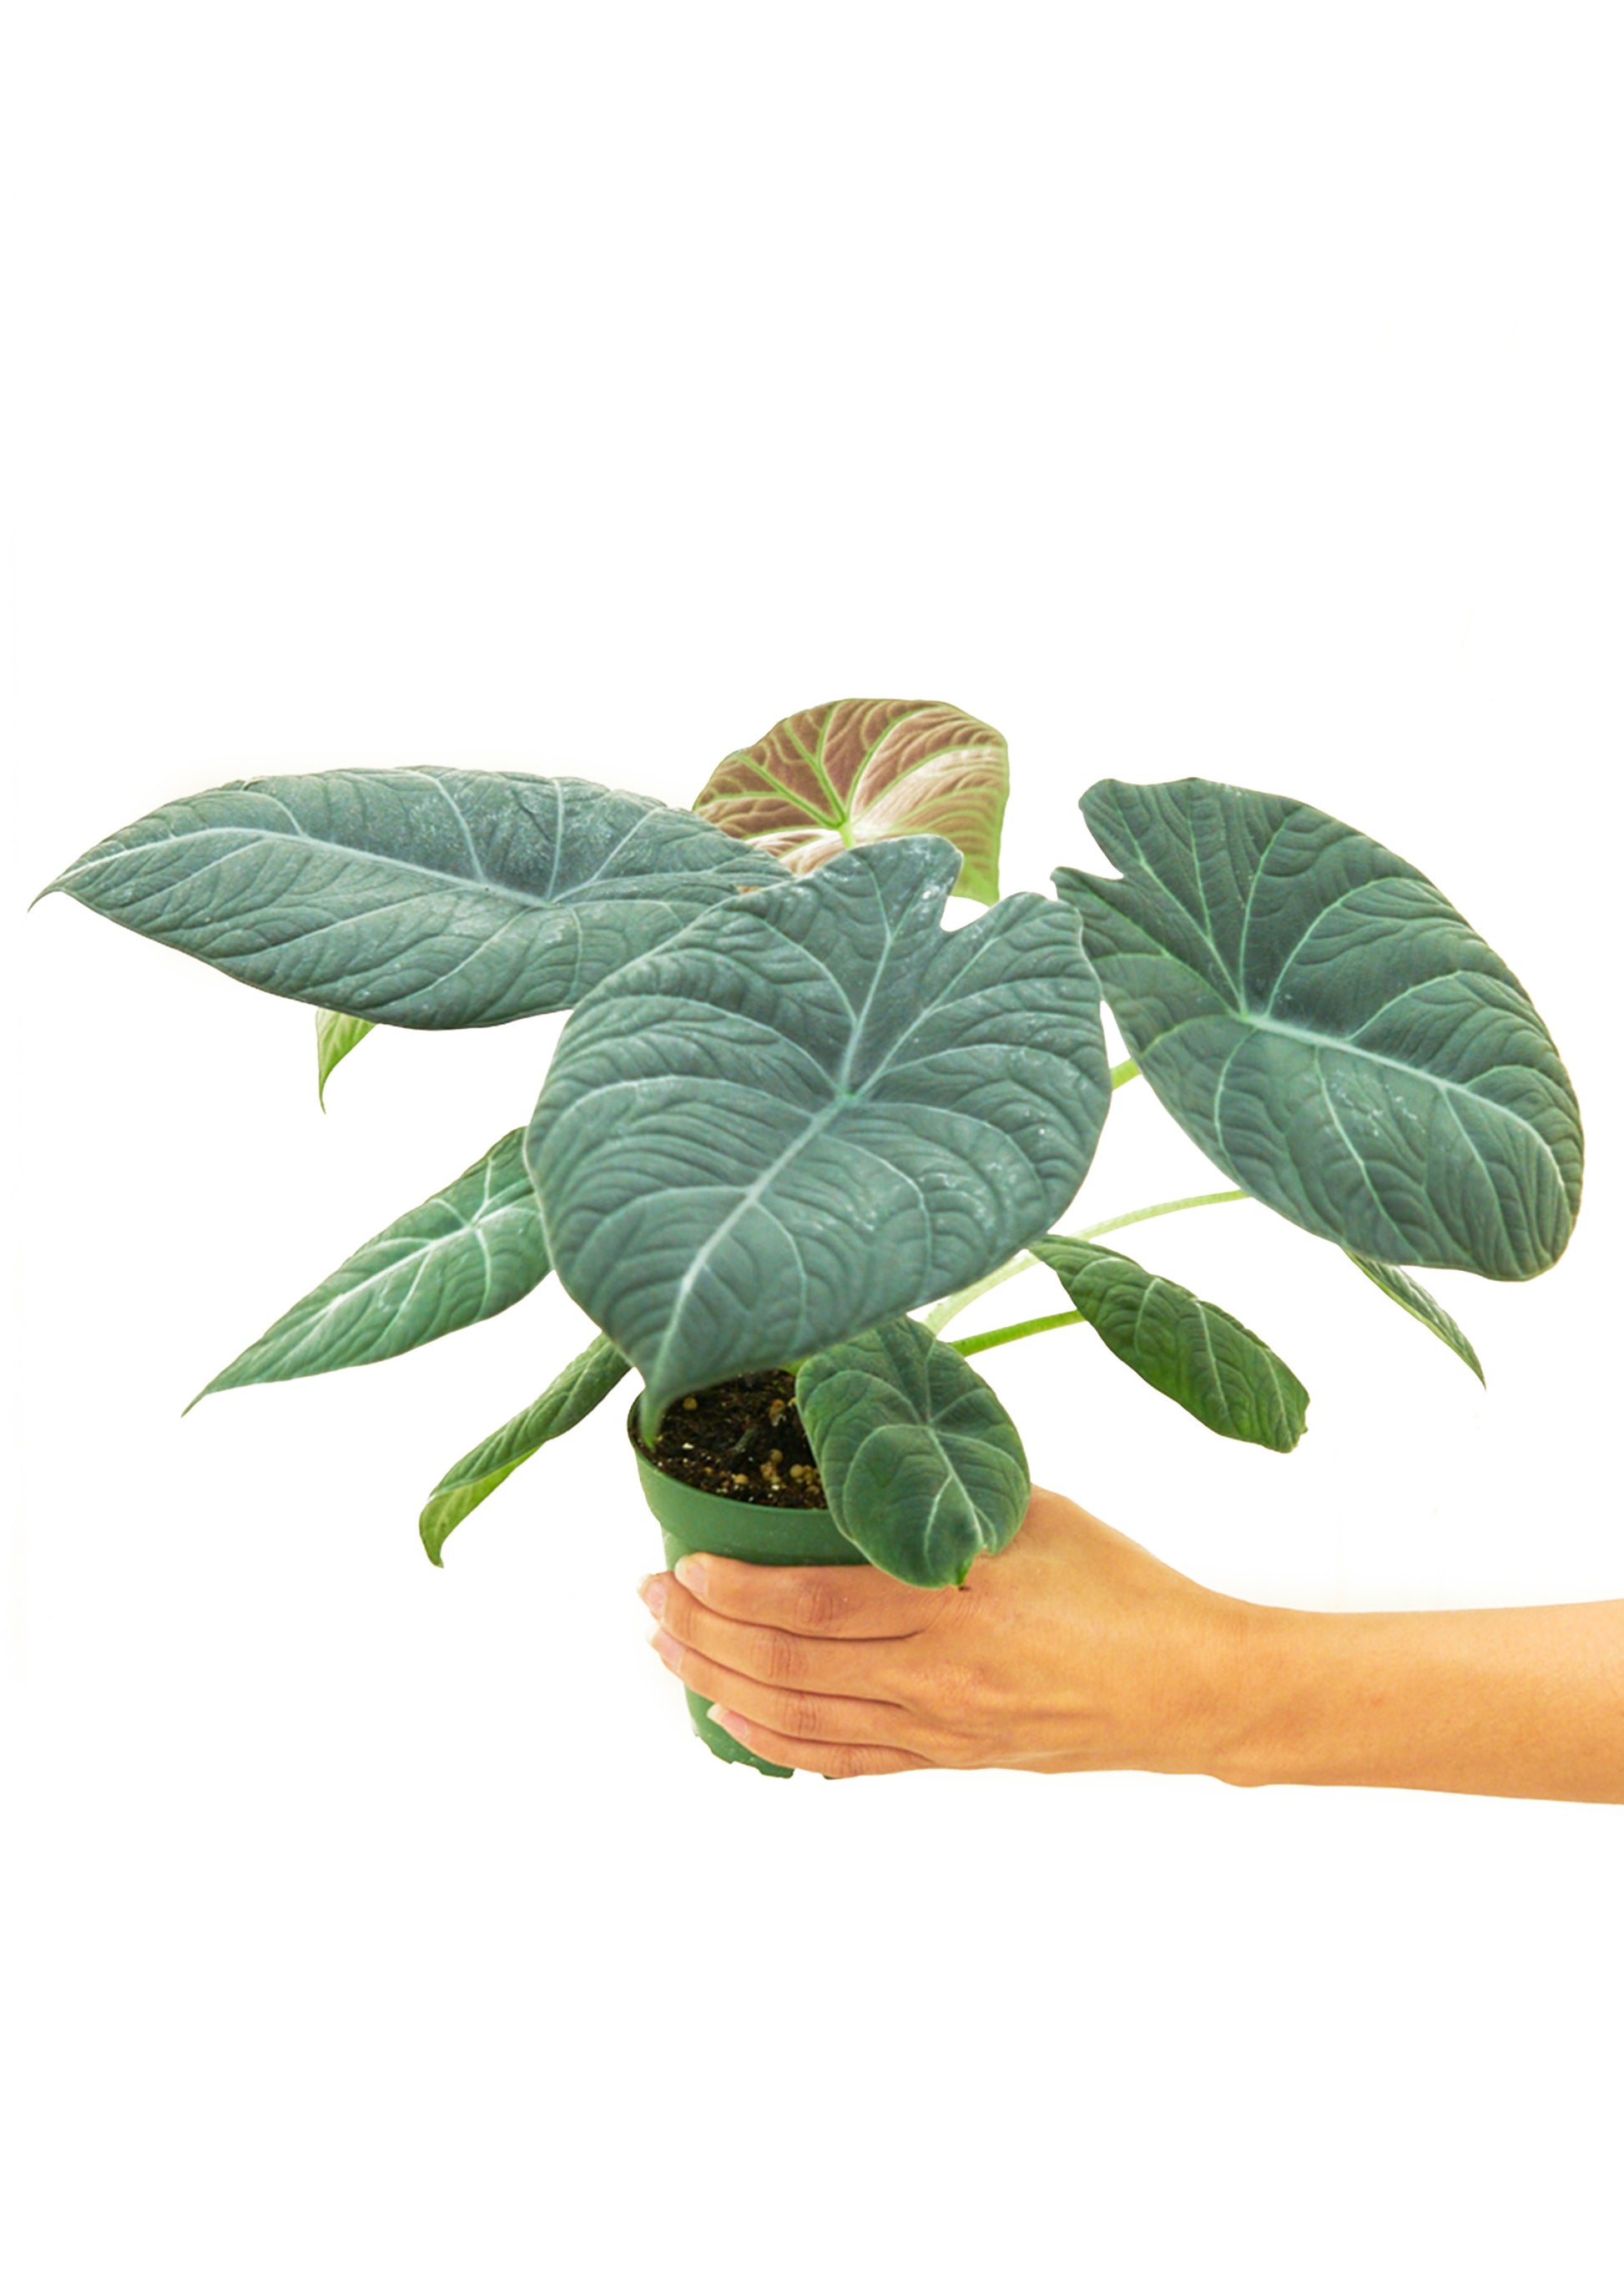 Alocasia 'Grey Dragon'  Plant Boxx Small 4" Pot (8-12" tall)  